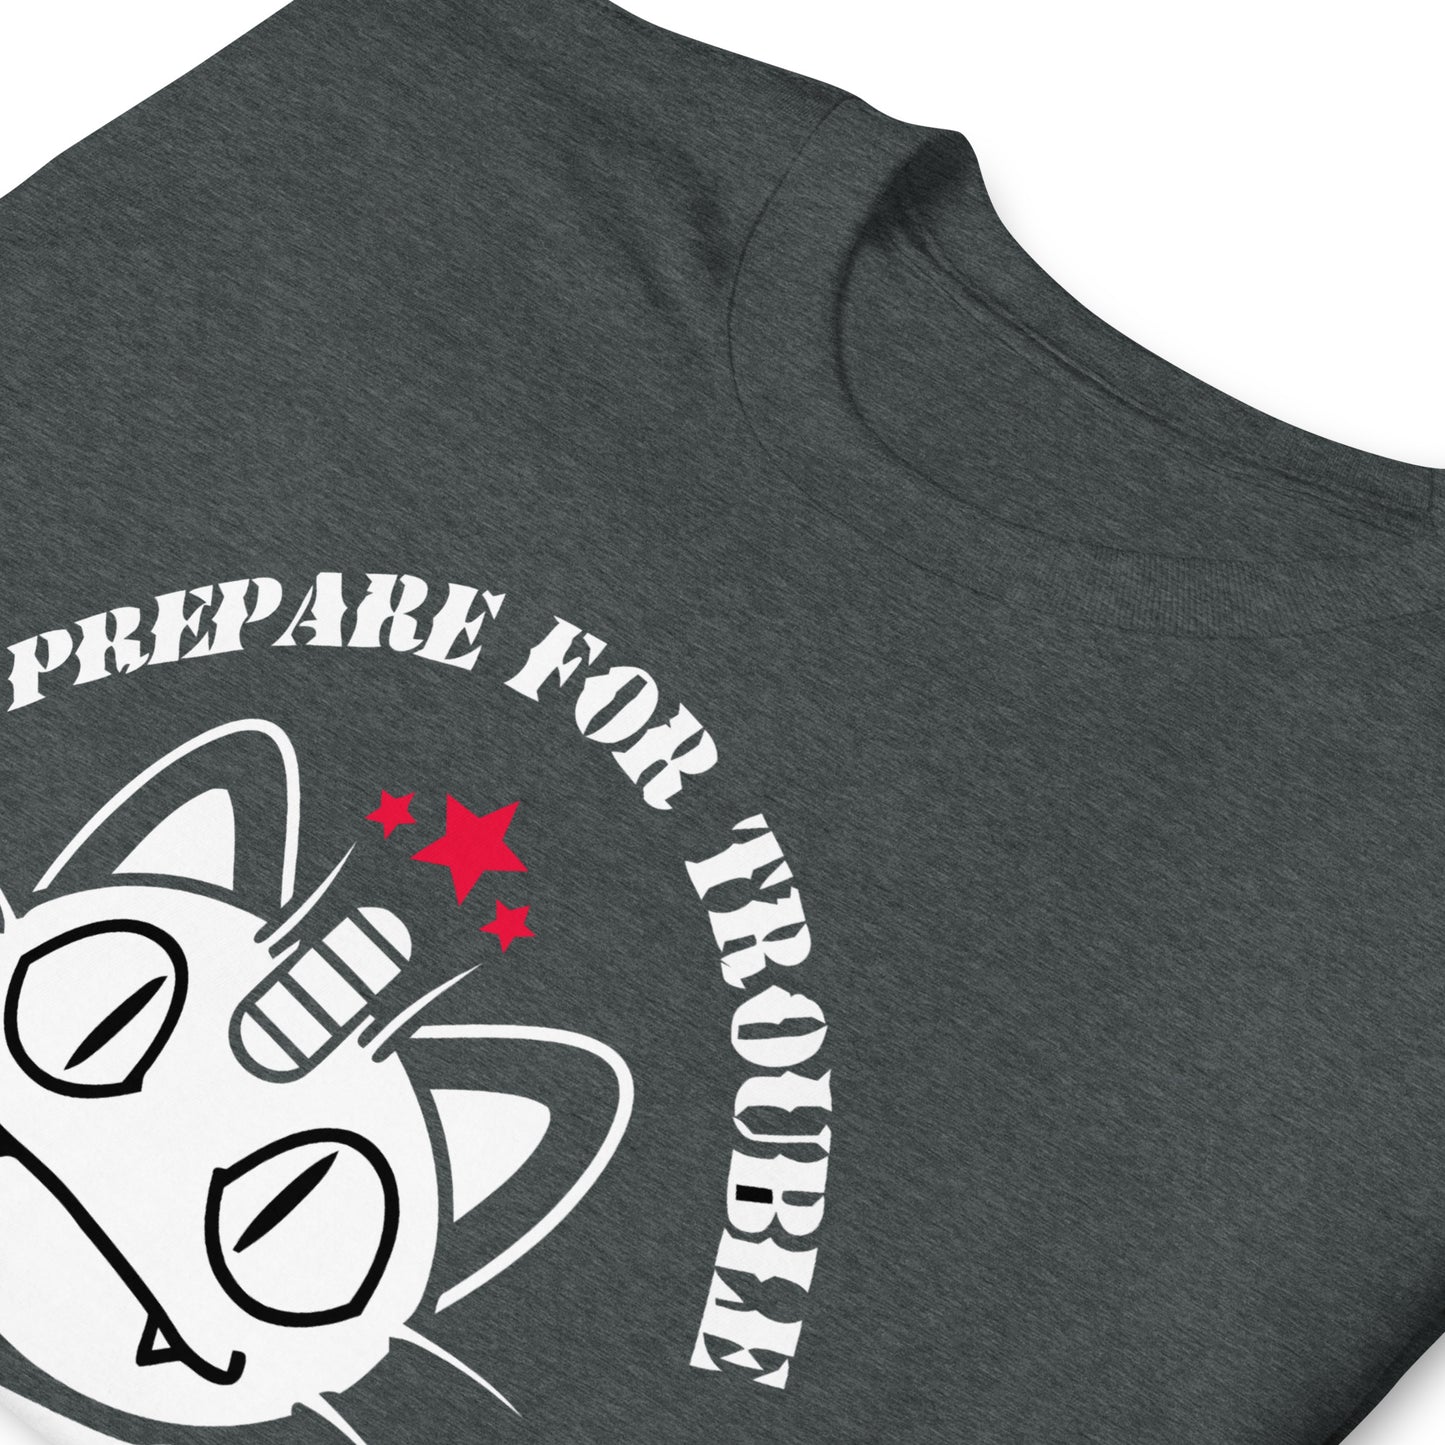 Meowth Pokemon T-Shirt.